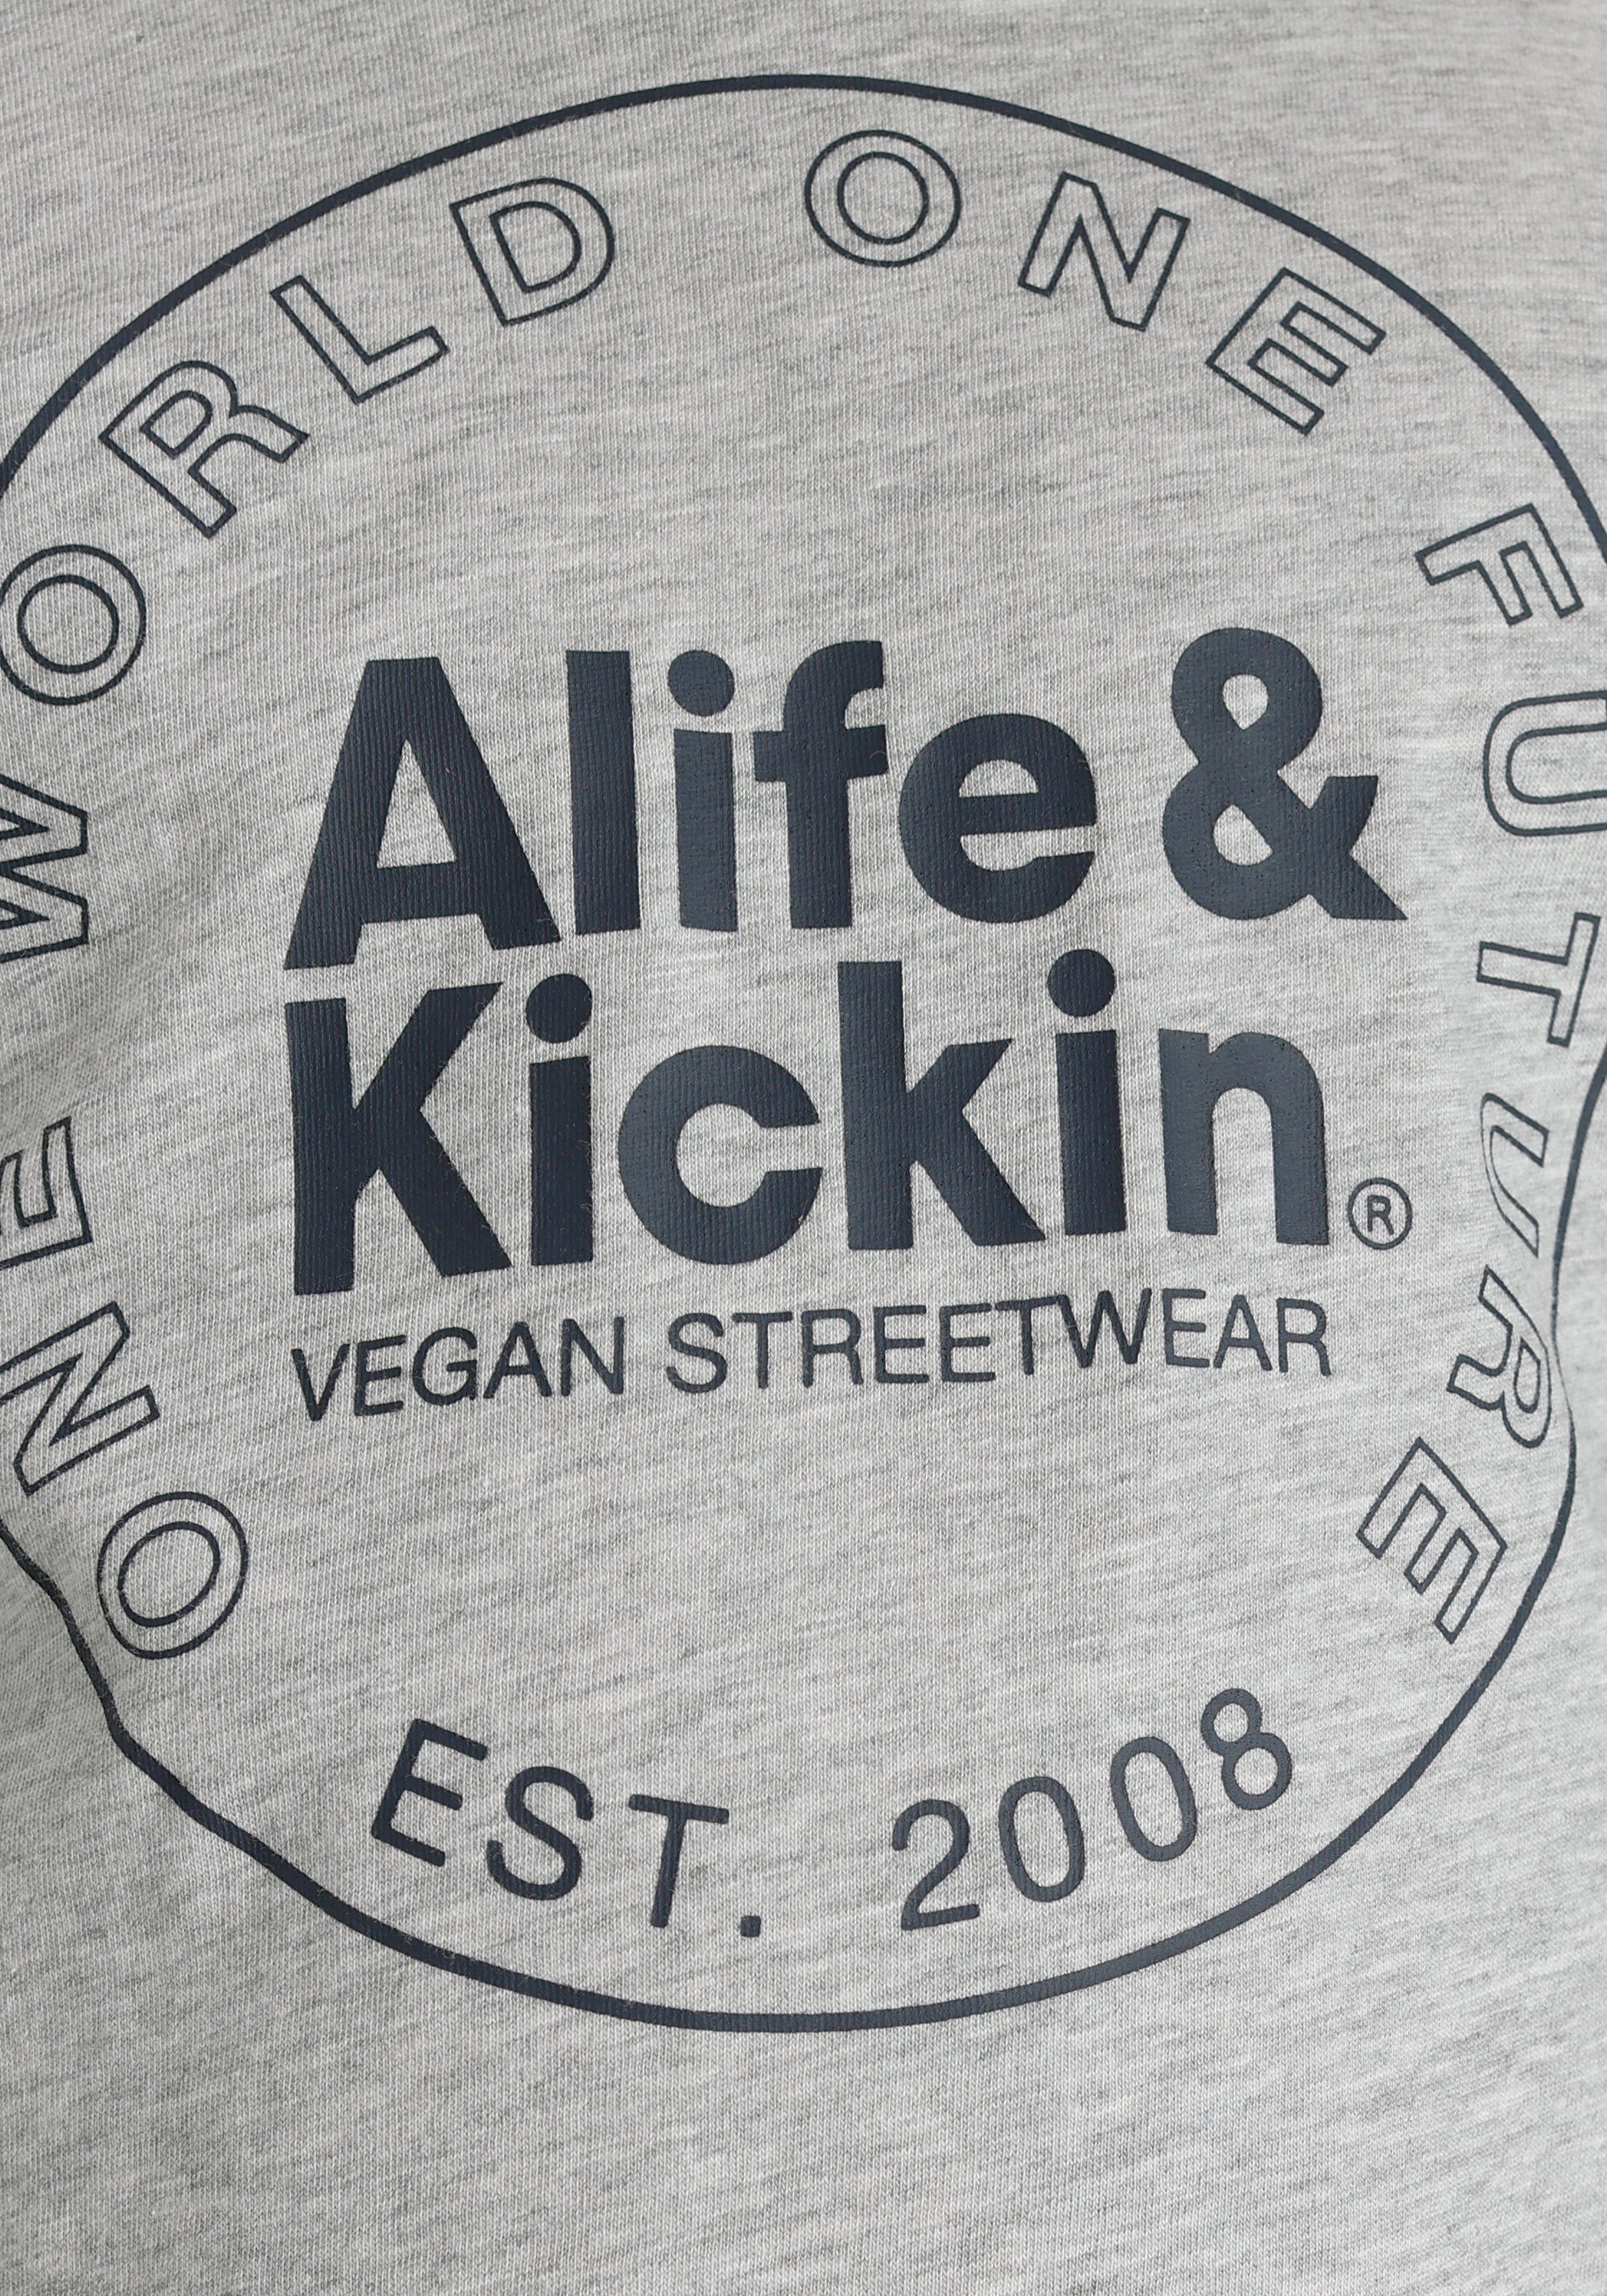 Kickin NEUE melierter Alife Qualität, Logo-Print & Langarmshirt MARKE! in